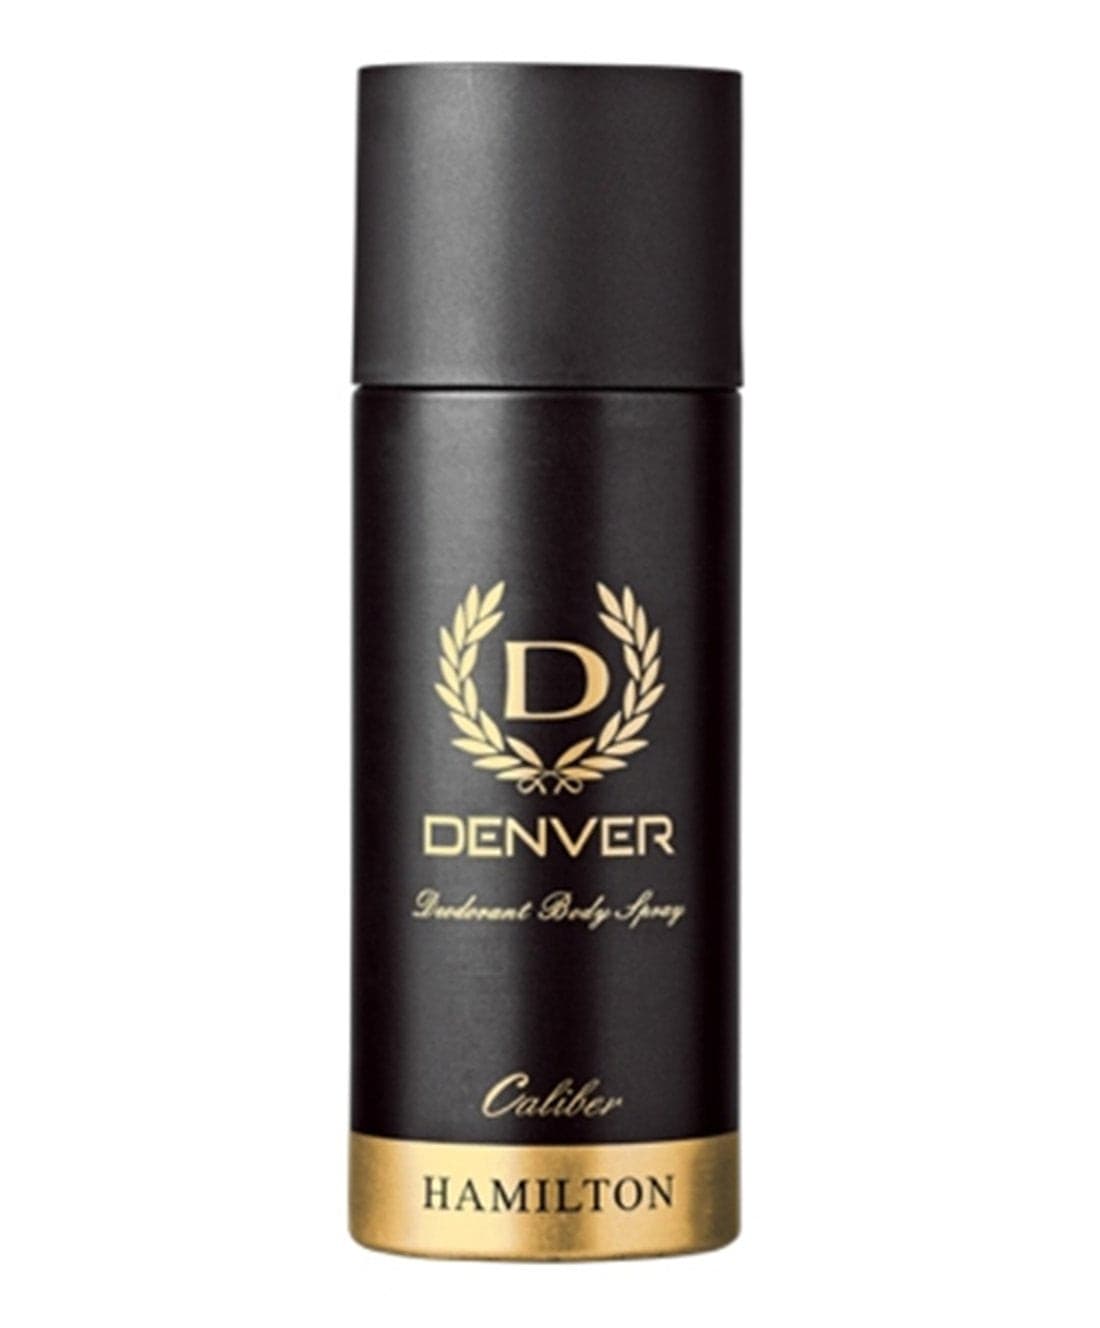 Denver Hamilton Caliber Deodorant For Men.